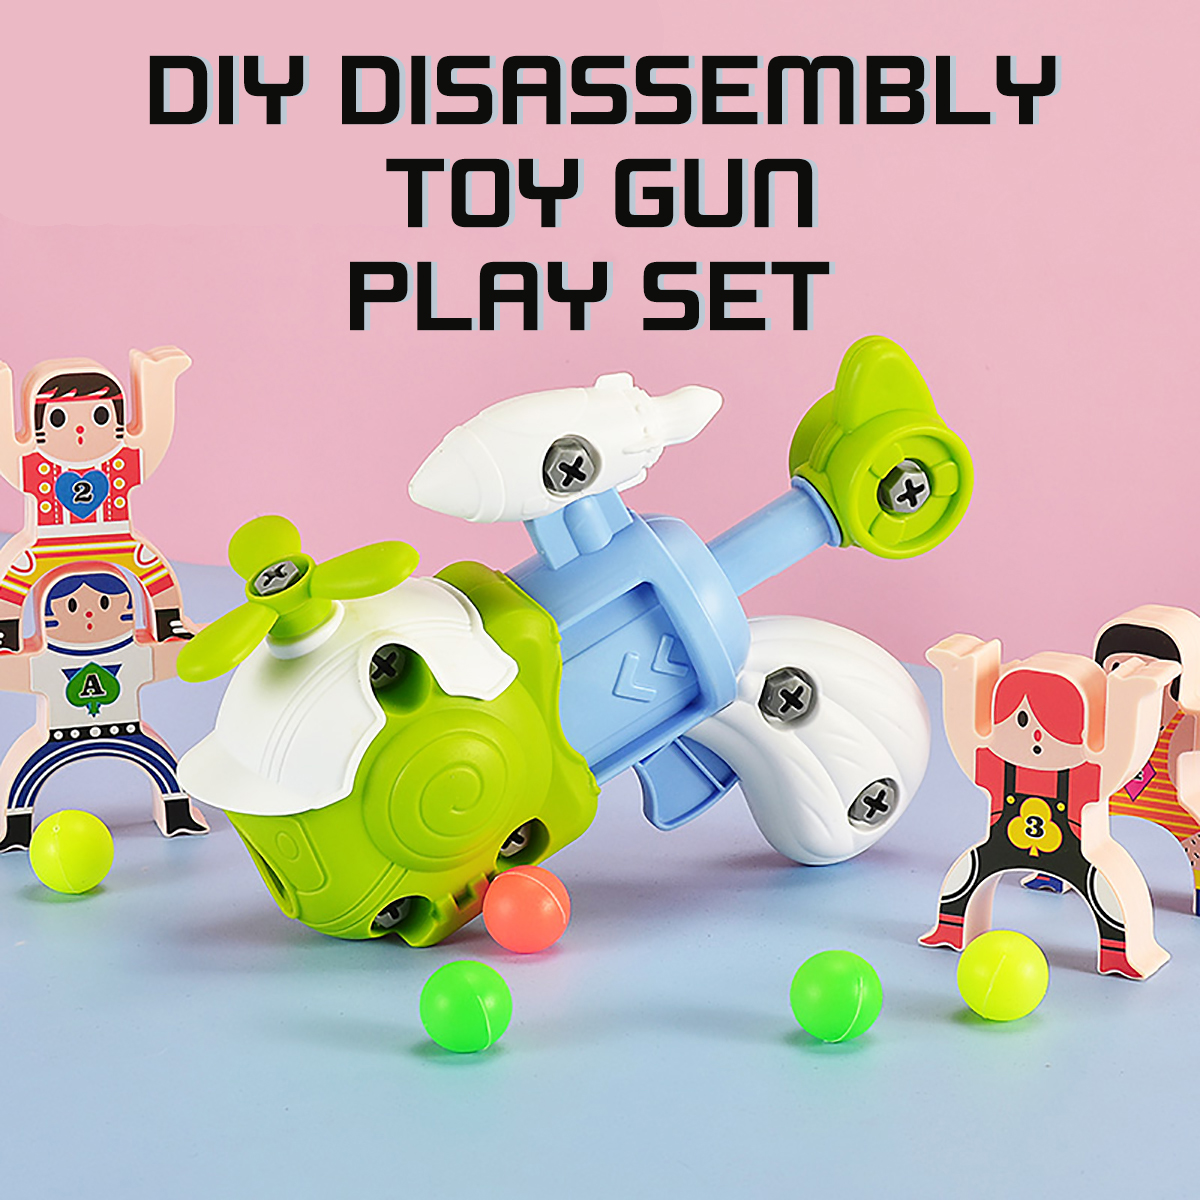 DIY-Disassembly-DinosaurAirplane-Guns-Play-Set-Model-Blocks-Assemble-Educational-Toy-for-Kids-Gift-1829732-2